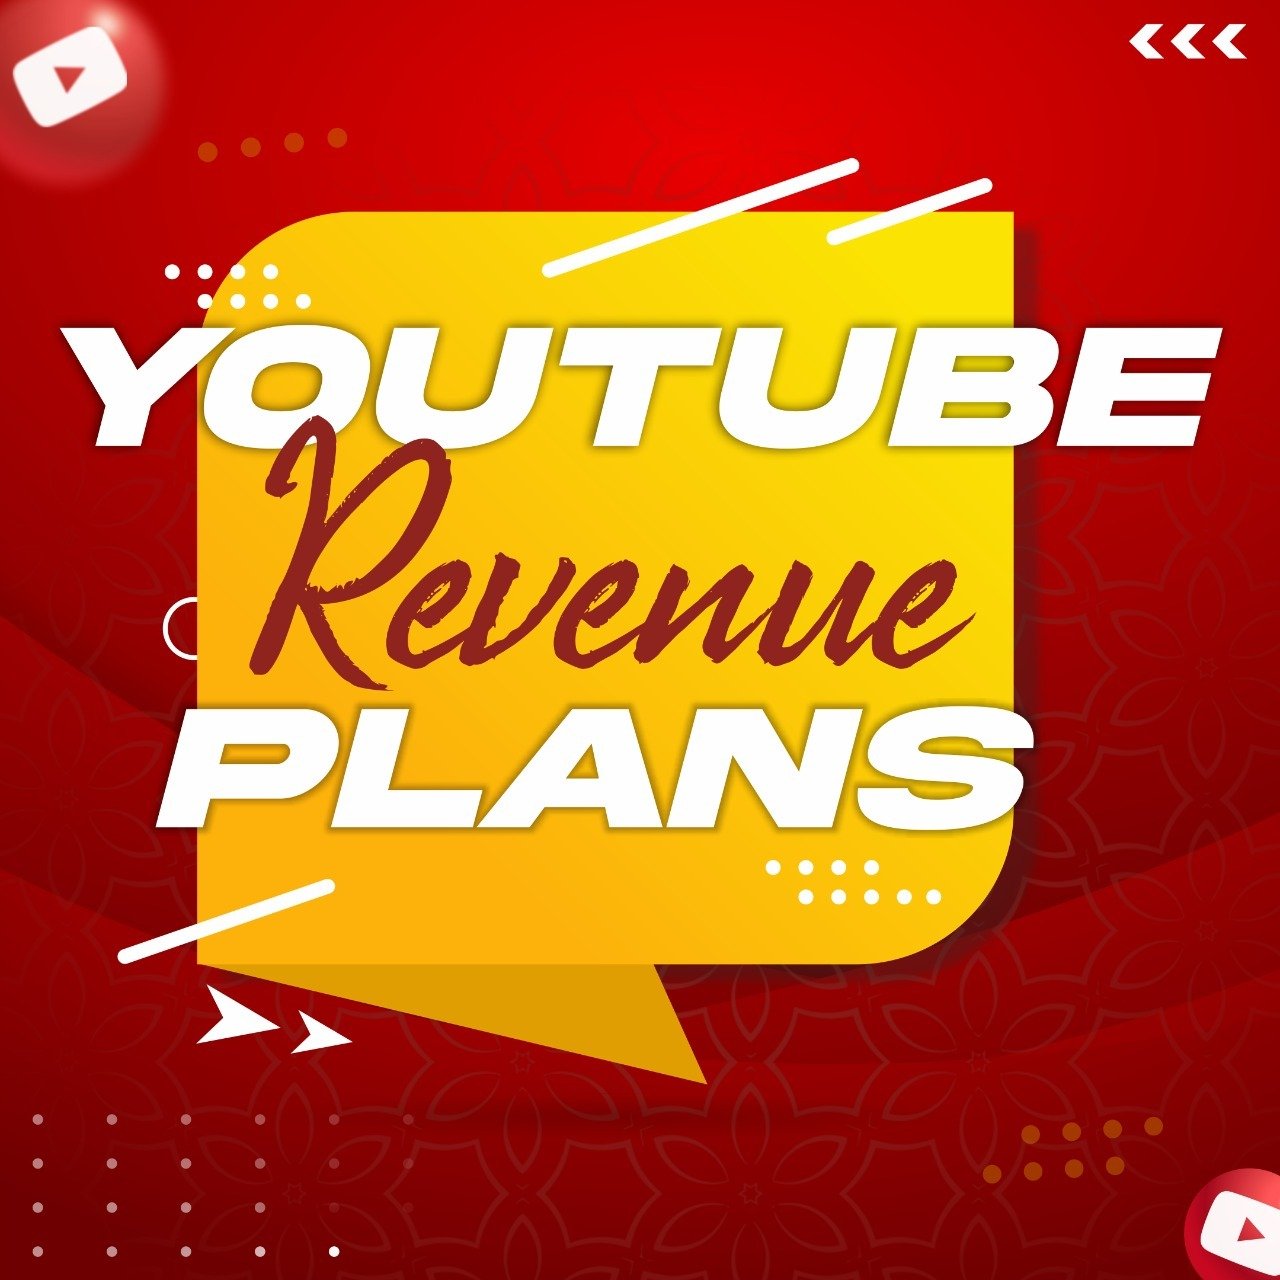 YouTube Revenue Plans